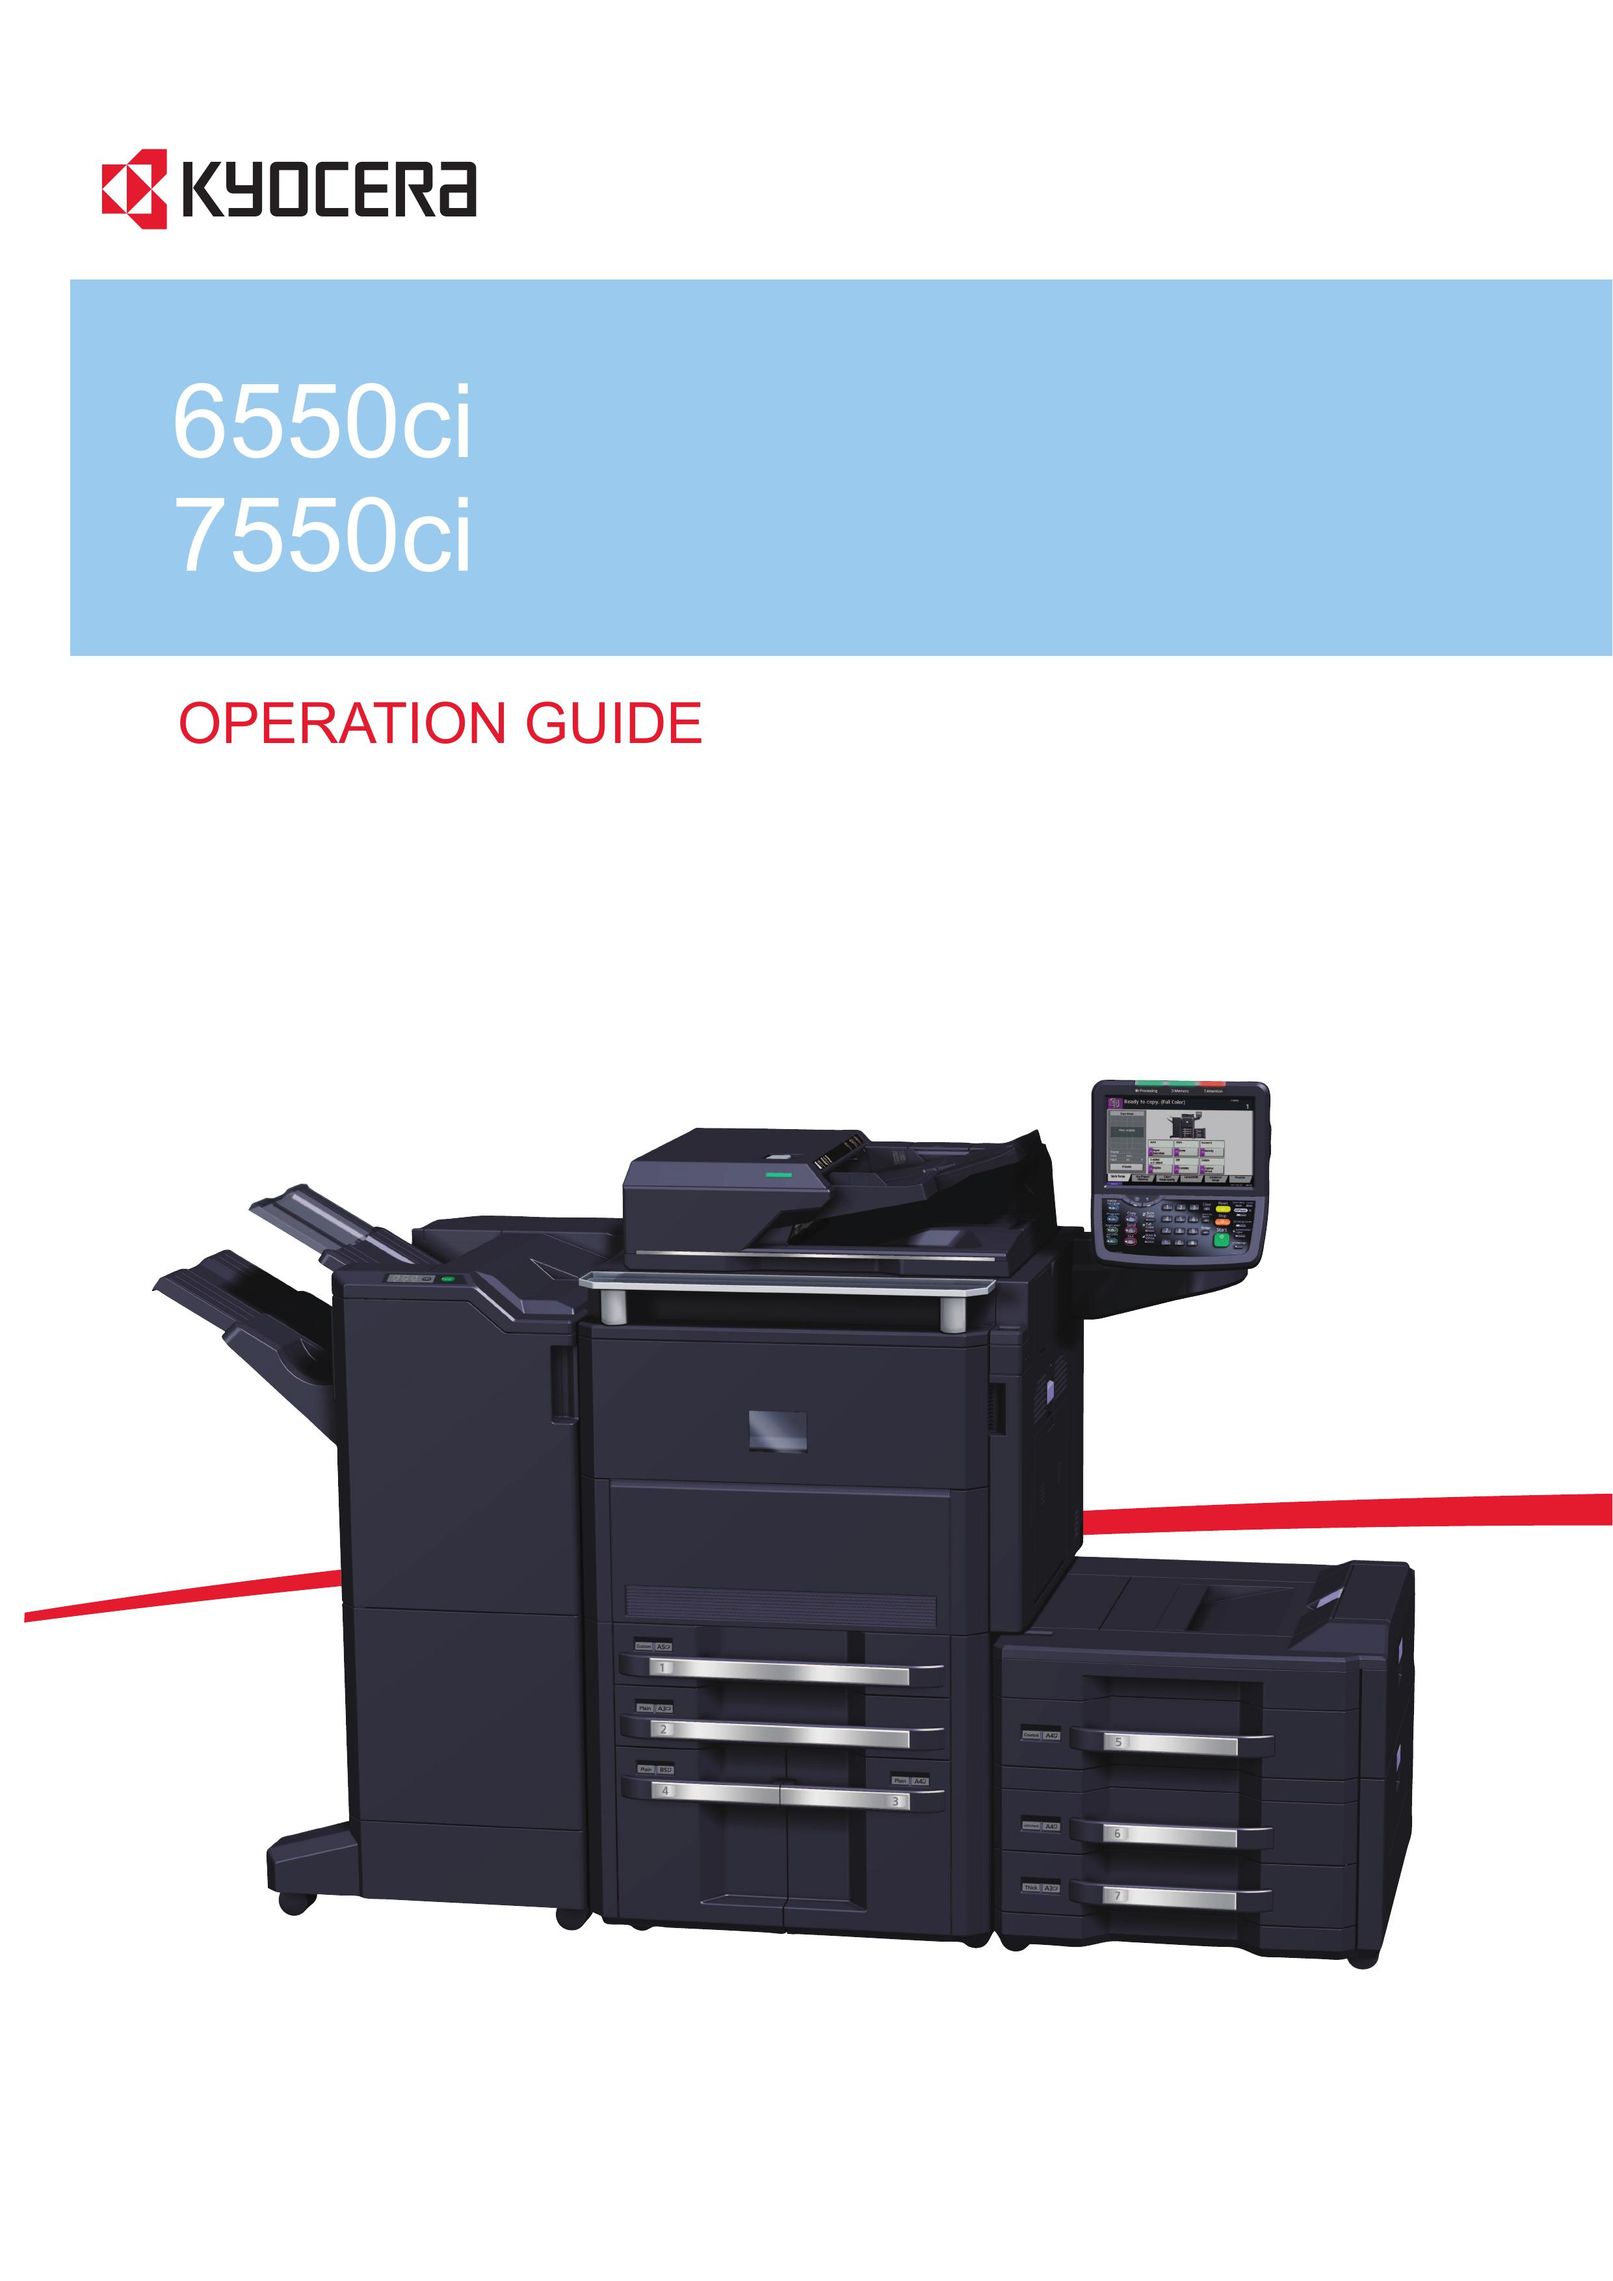 Kyocera 6550ci All in One Printer User Manual